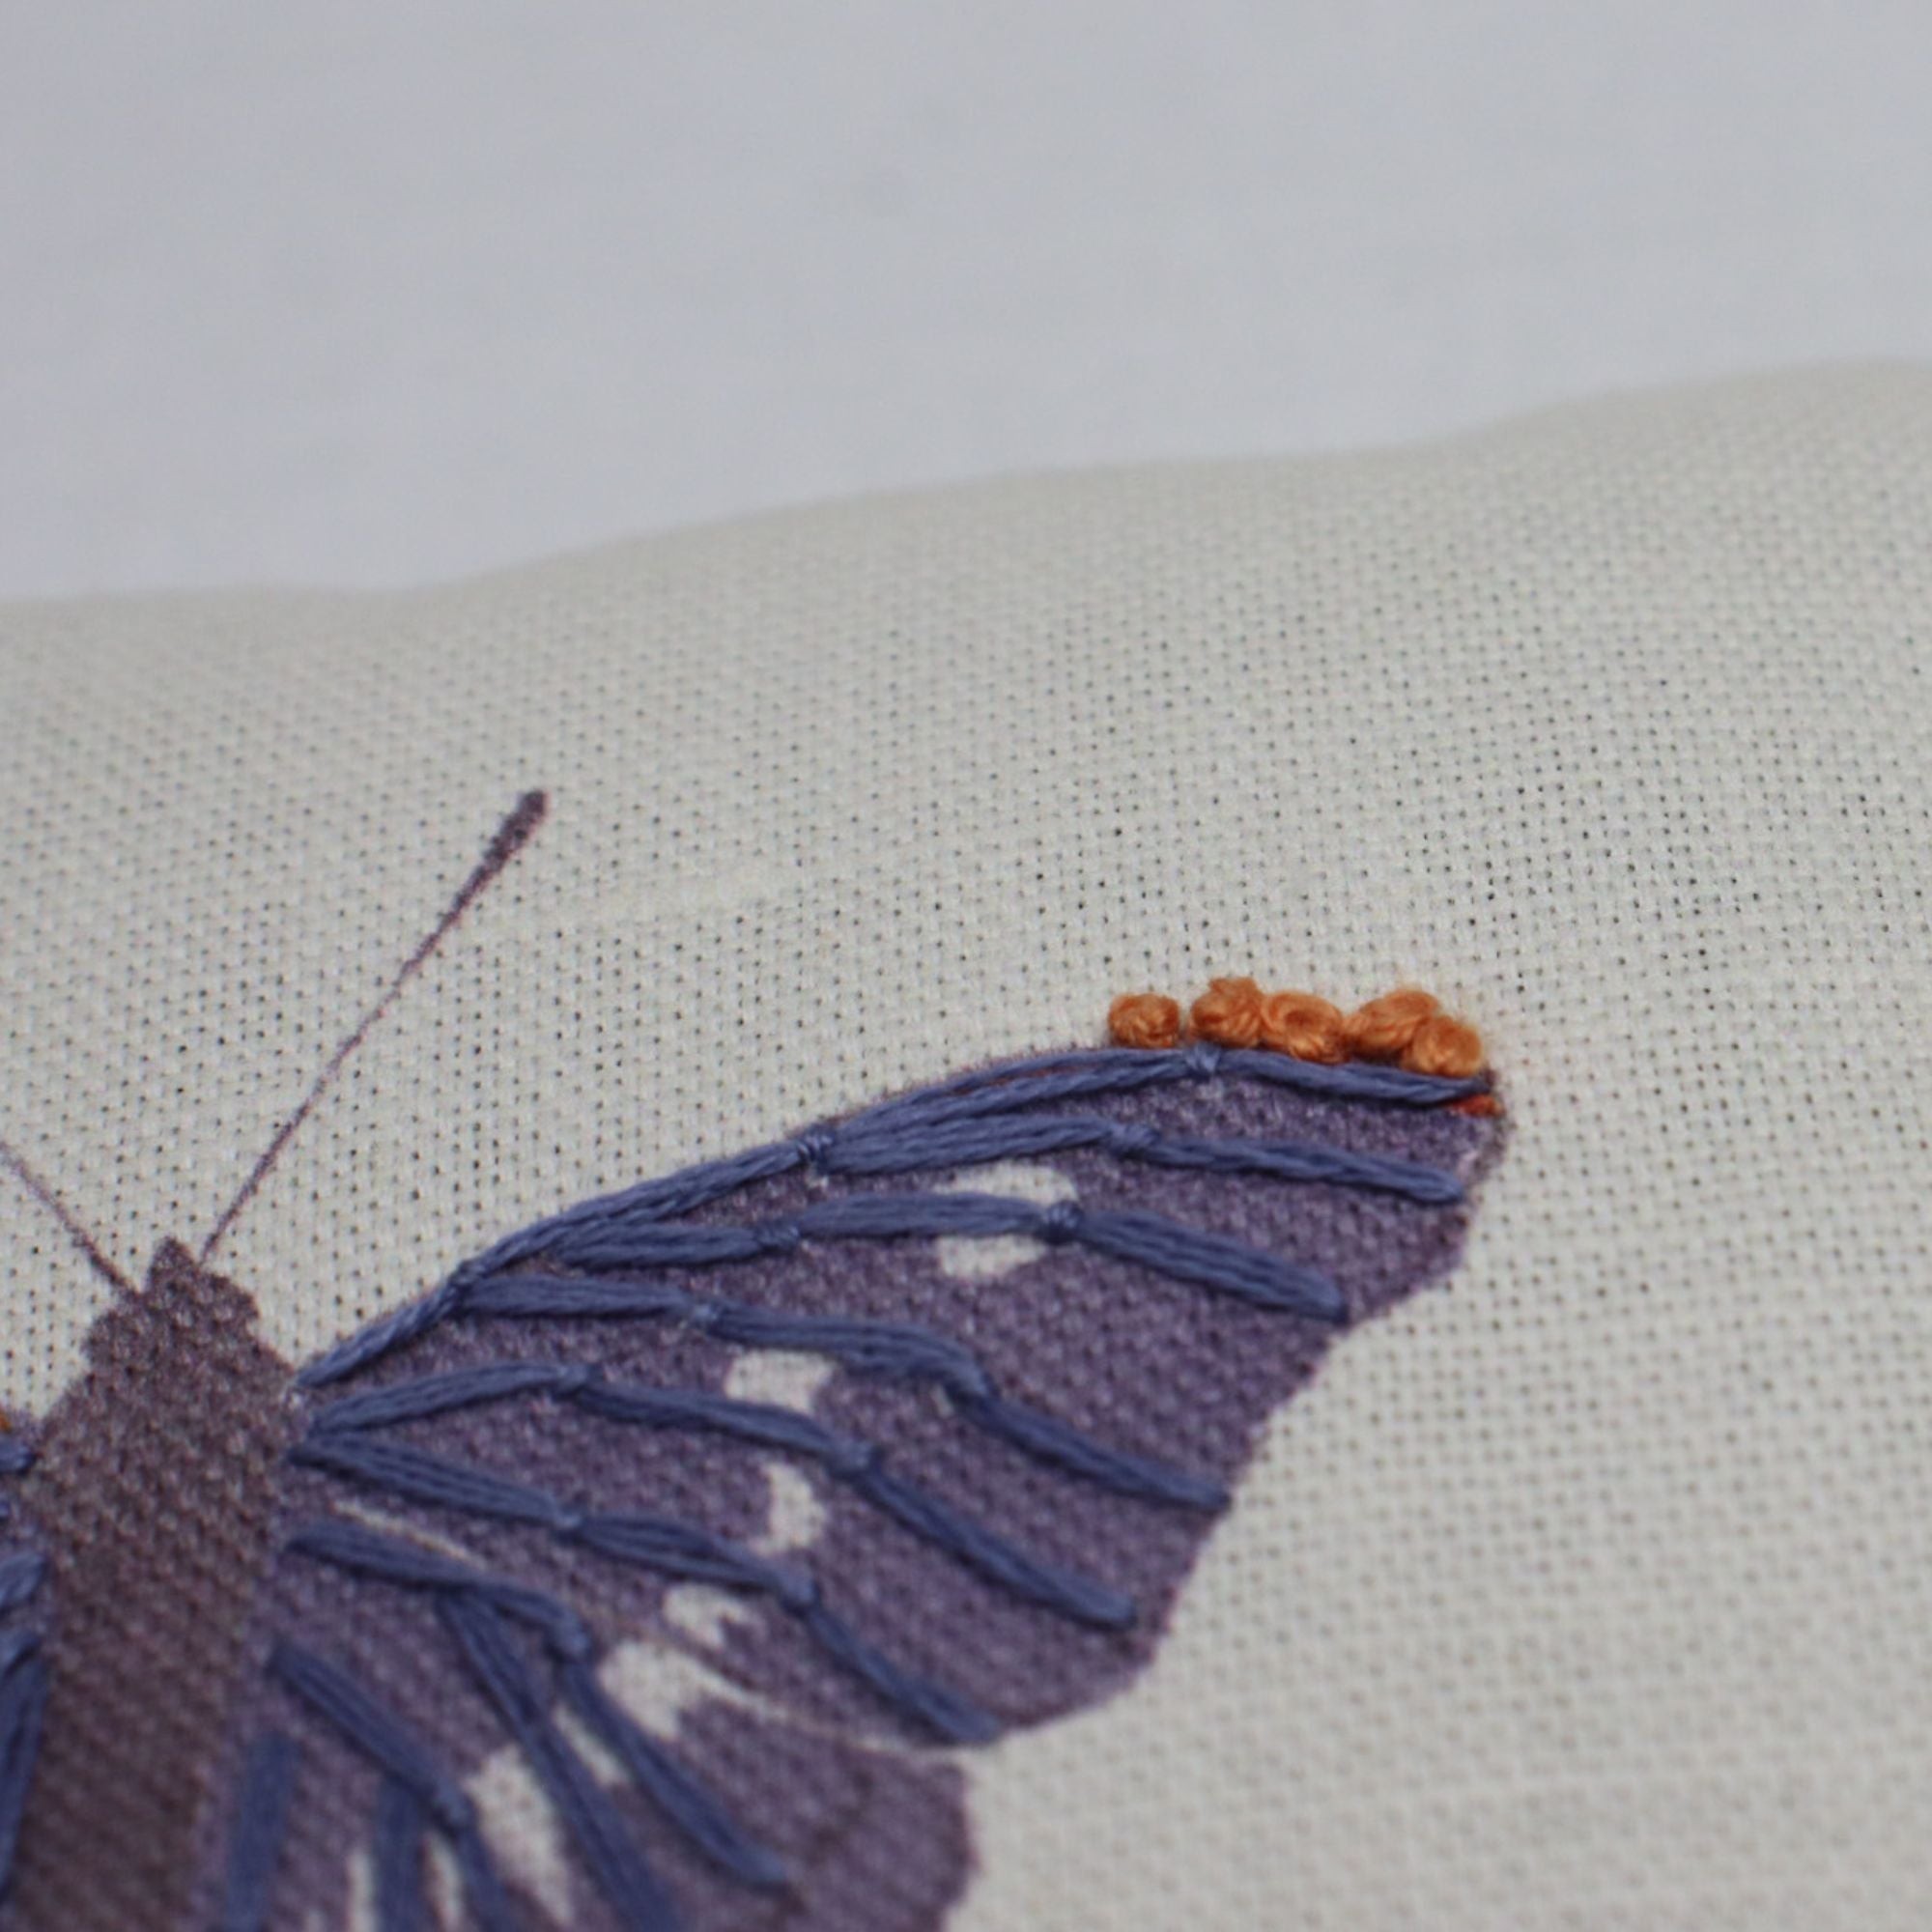 Knepp 'Emperor Butterfly' Lavender Bag Purple